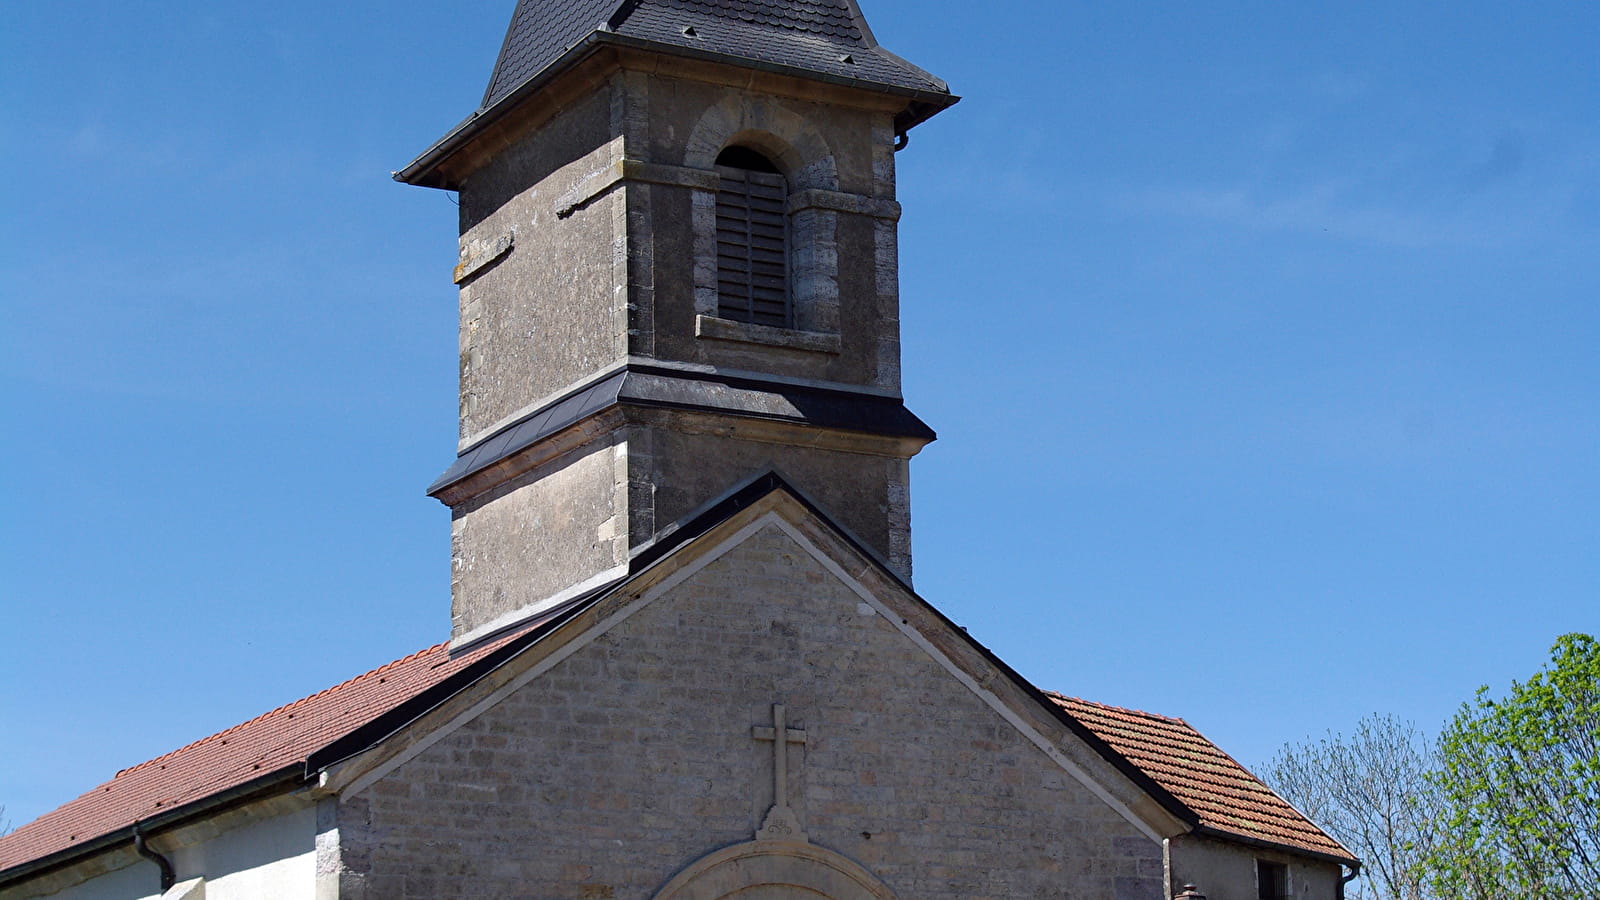 Eglise Saint-Barbe